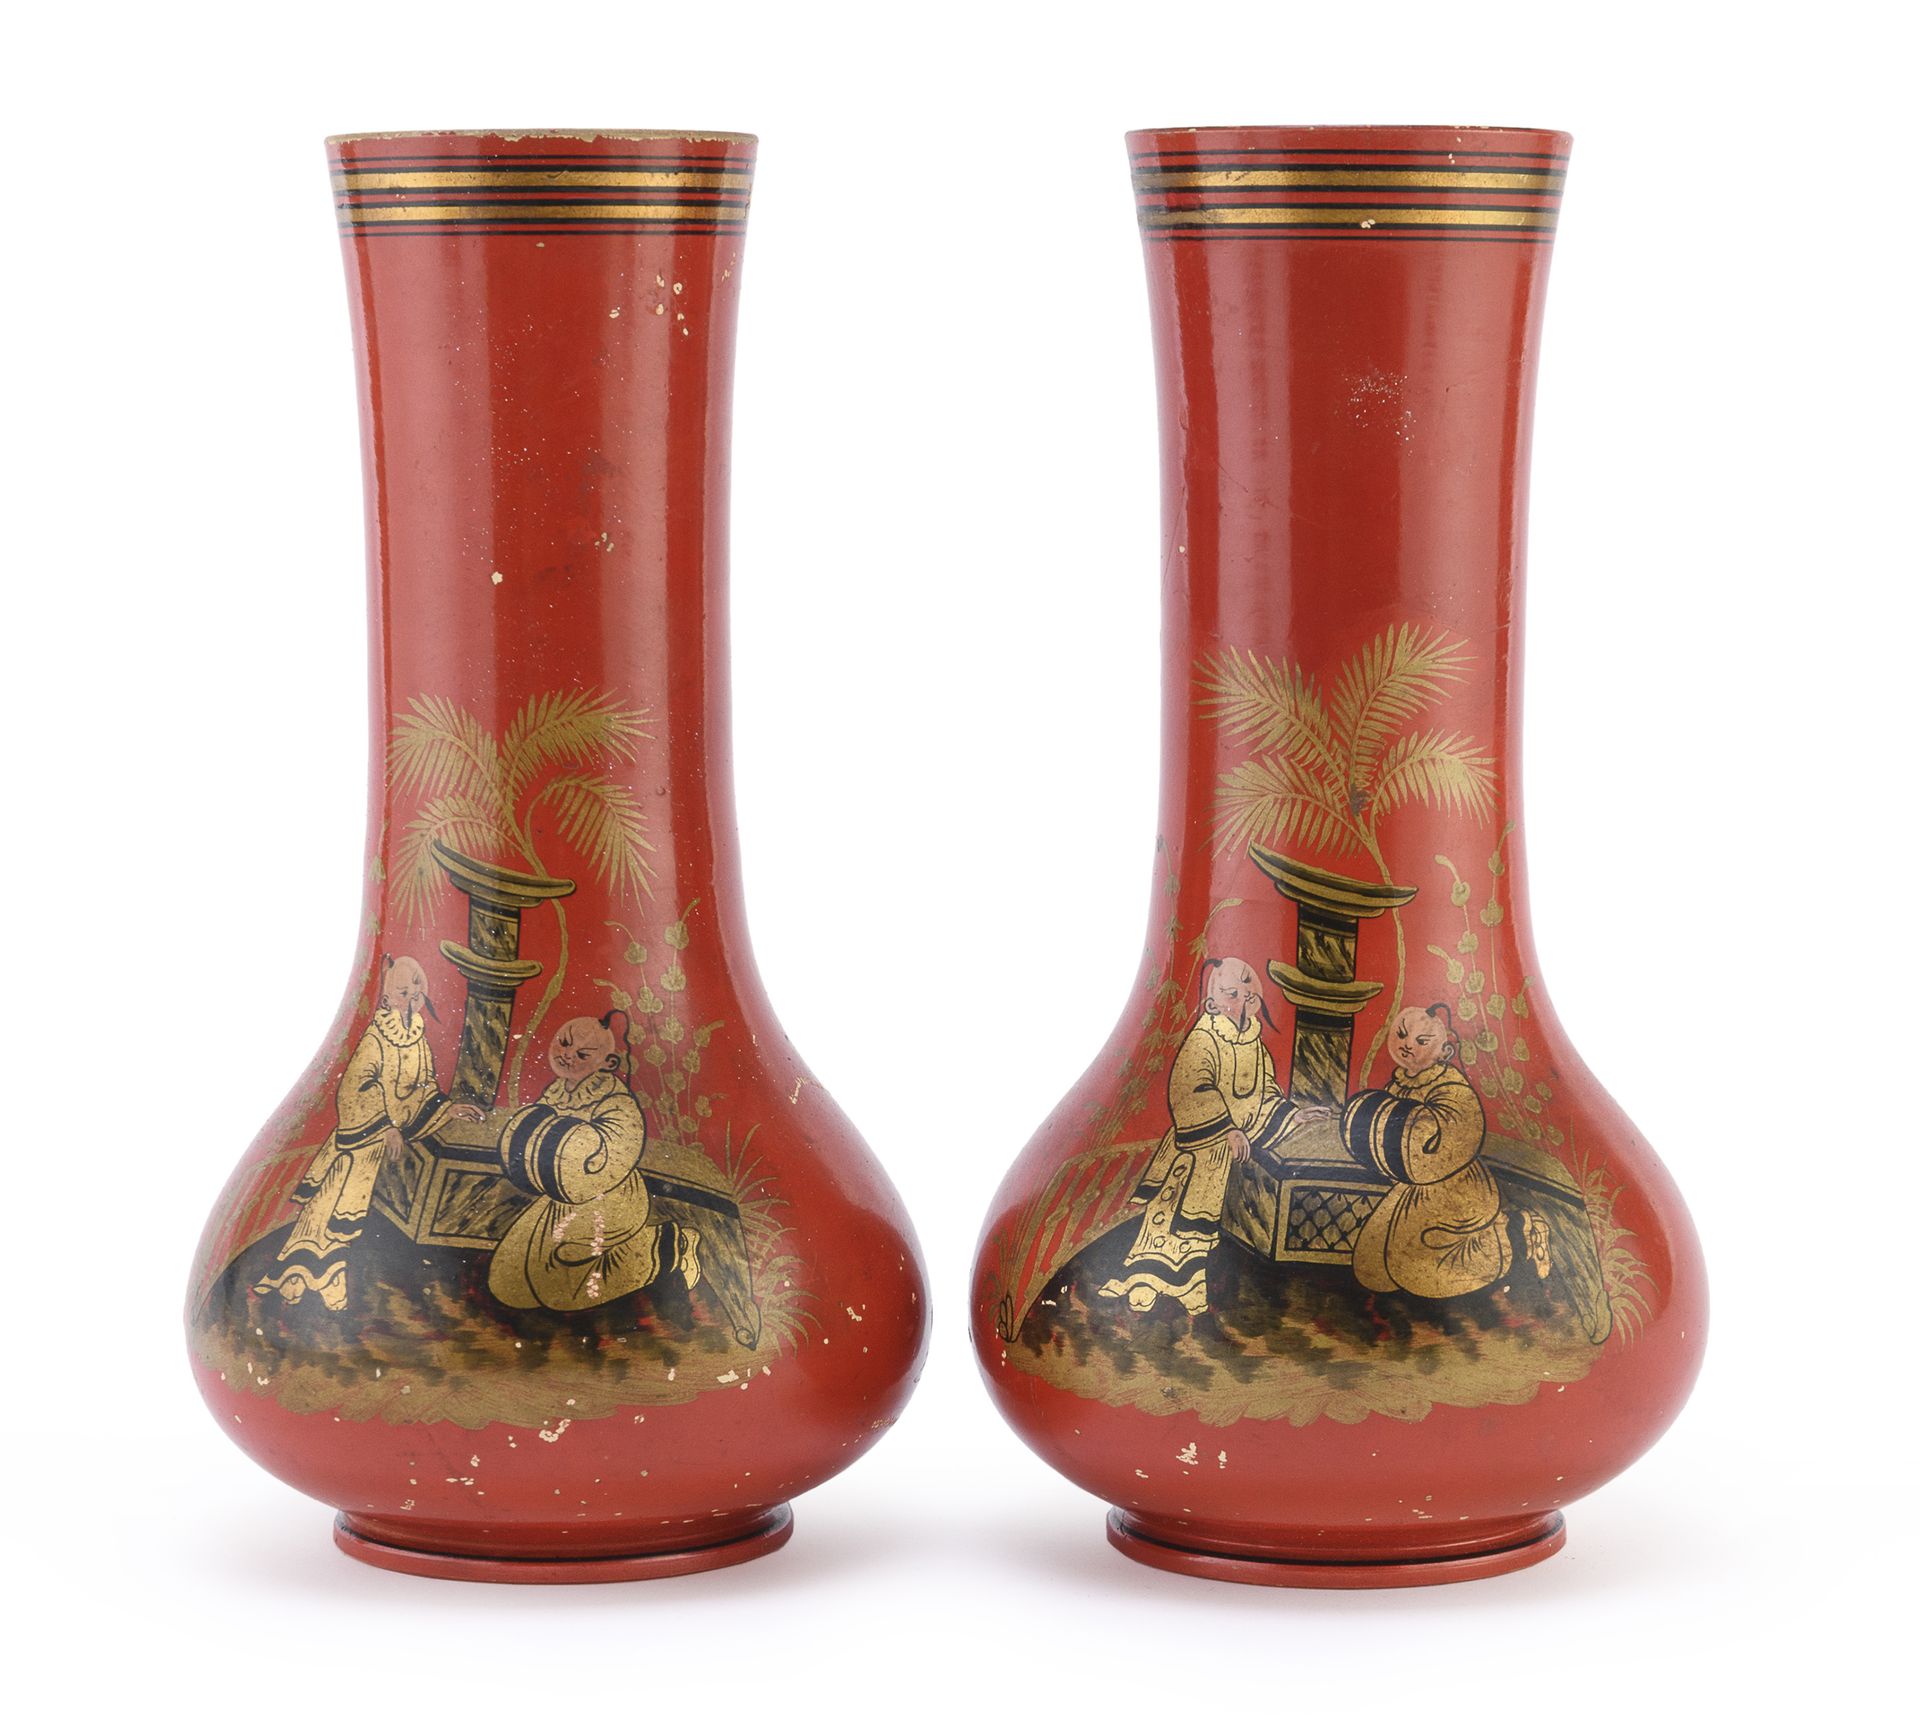 Null 一对彩绘瓷瓶，法国 20世纪上半叶

装饰在红色背景上的传统花园中的文人。

尺寸为26 x 12厘米。